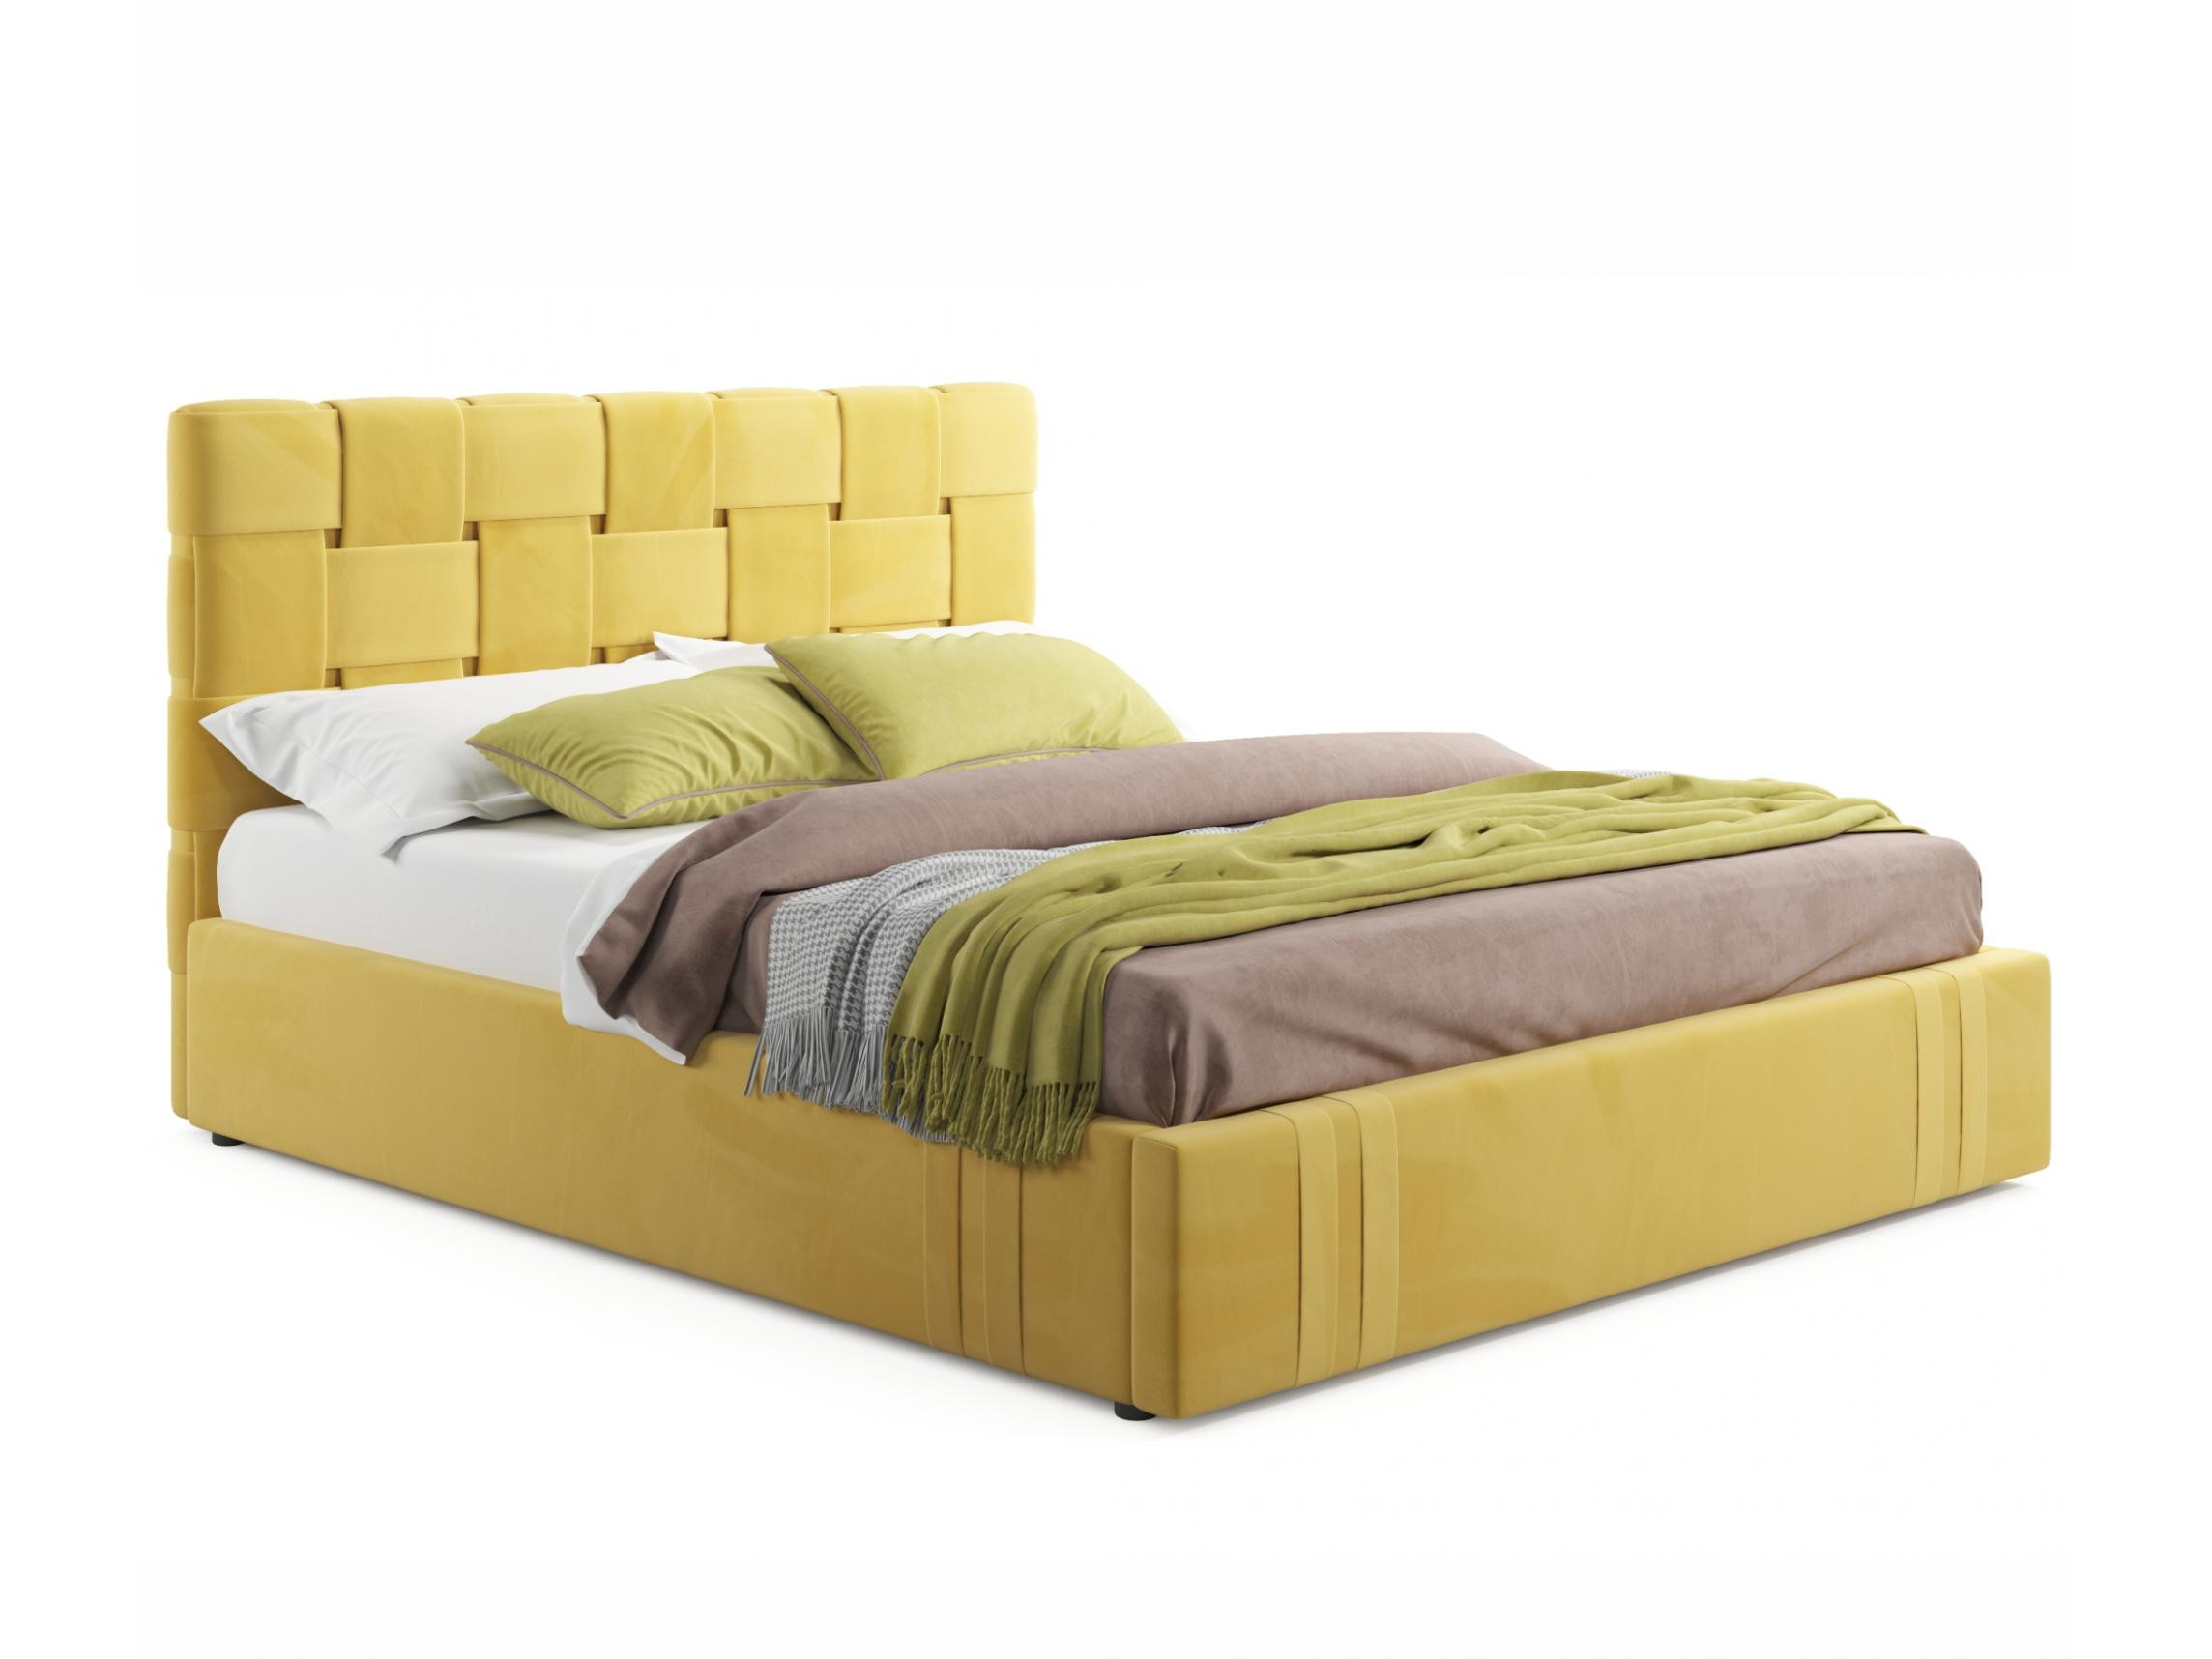 Комплект для сна Tiffany 1600 желтый с подъемным механизмом желтый, Желтый, Велюр, ДСП